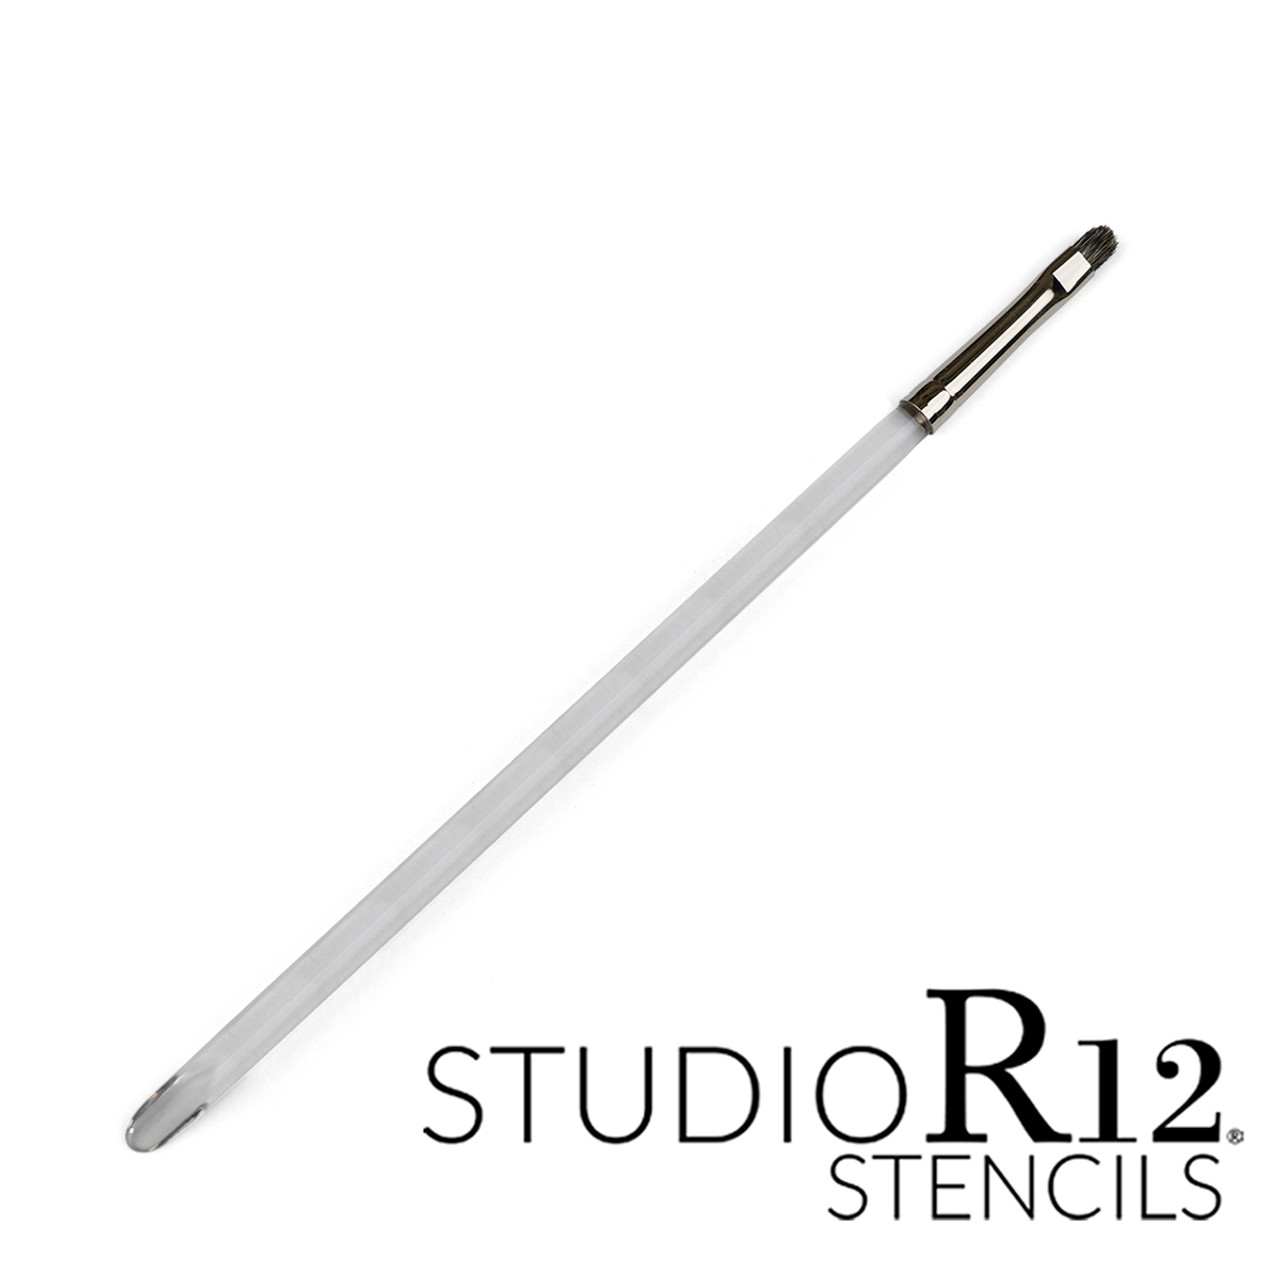 Mezzaluna Brush by StudioR12 | Select Size | BRSH262